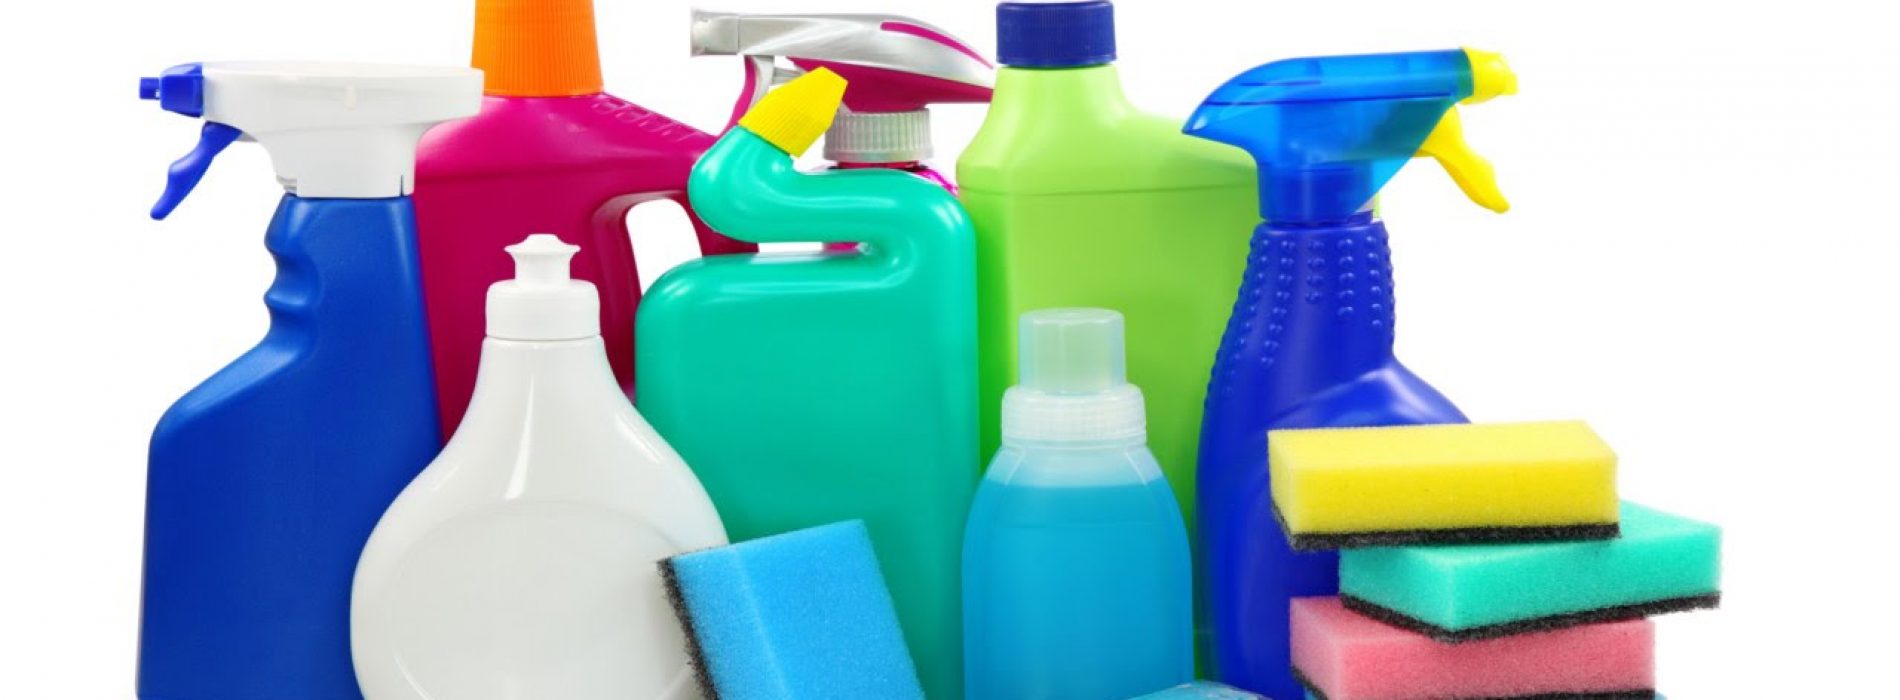 Economia aquecida estimulará vendas de produtos de limpeza